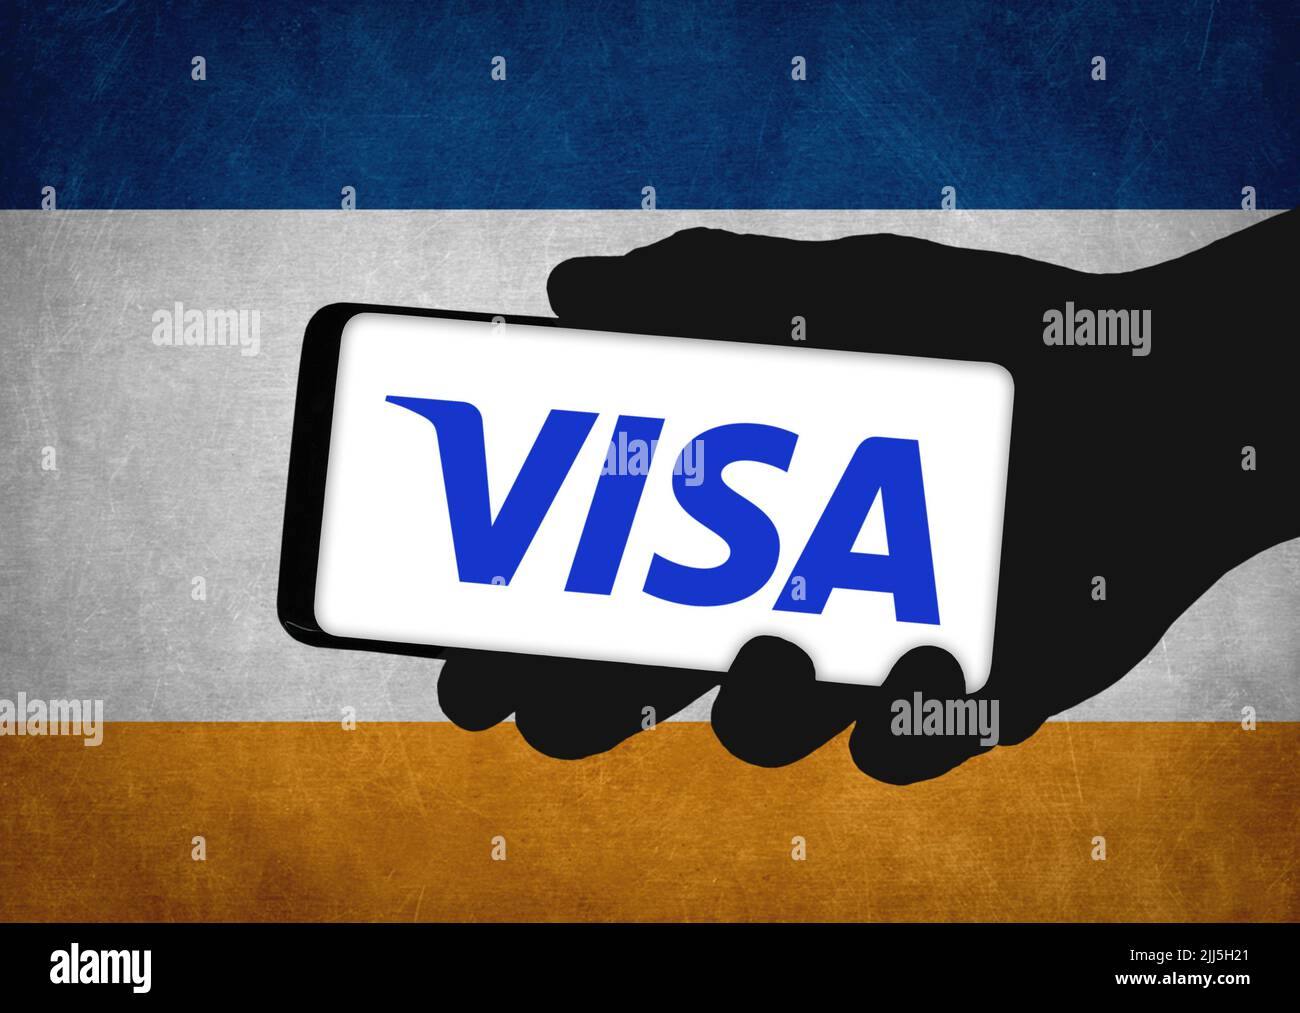 Visa company logo on mobile device Stock Photo